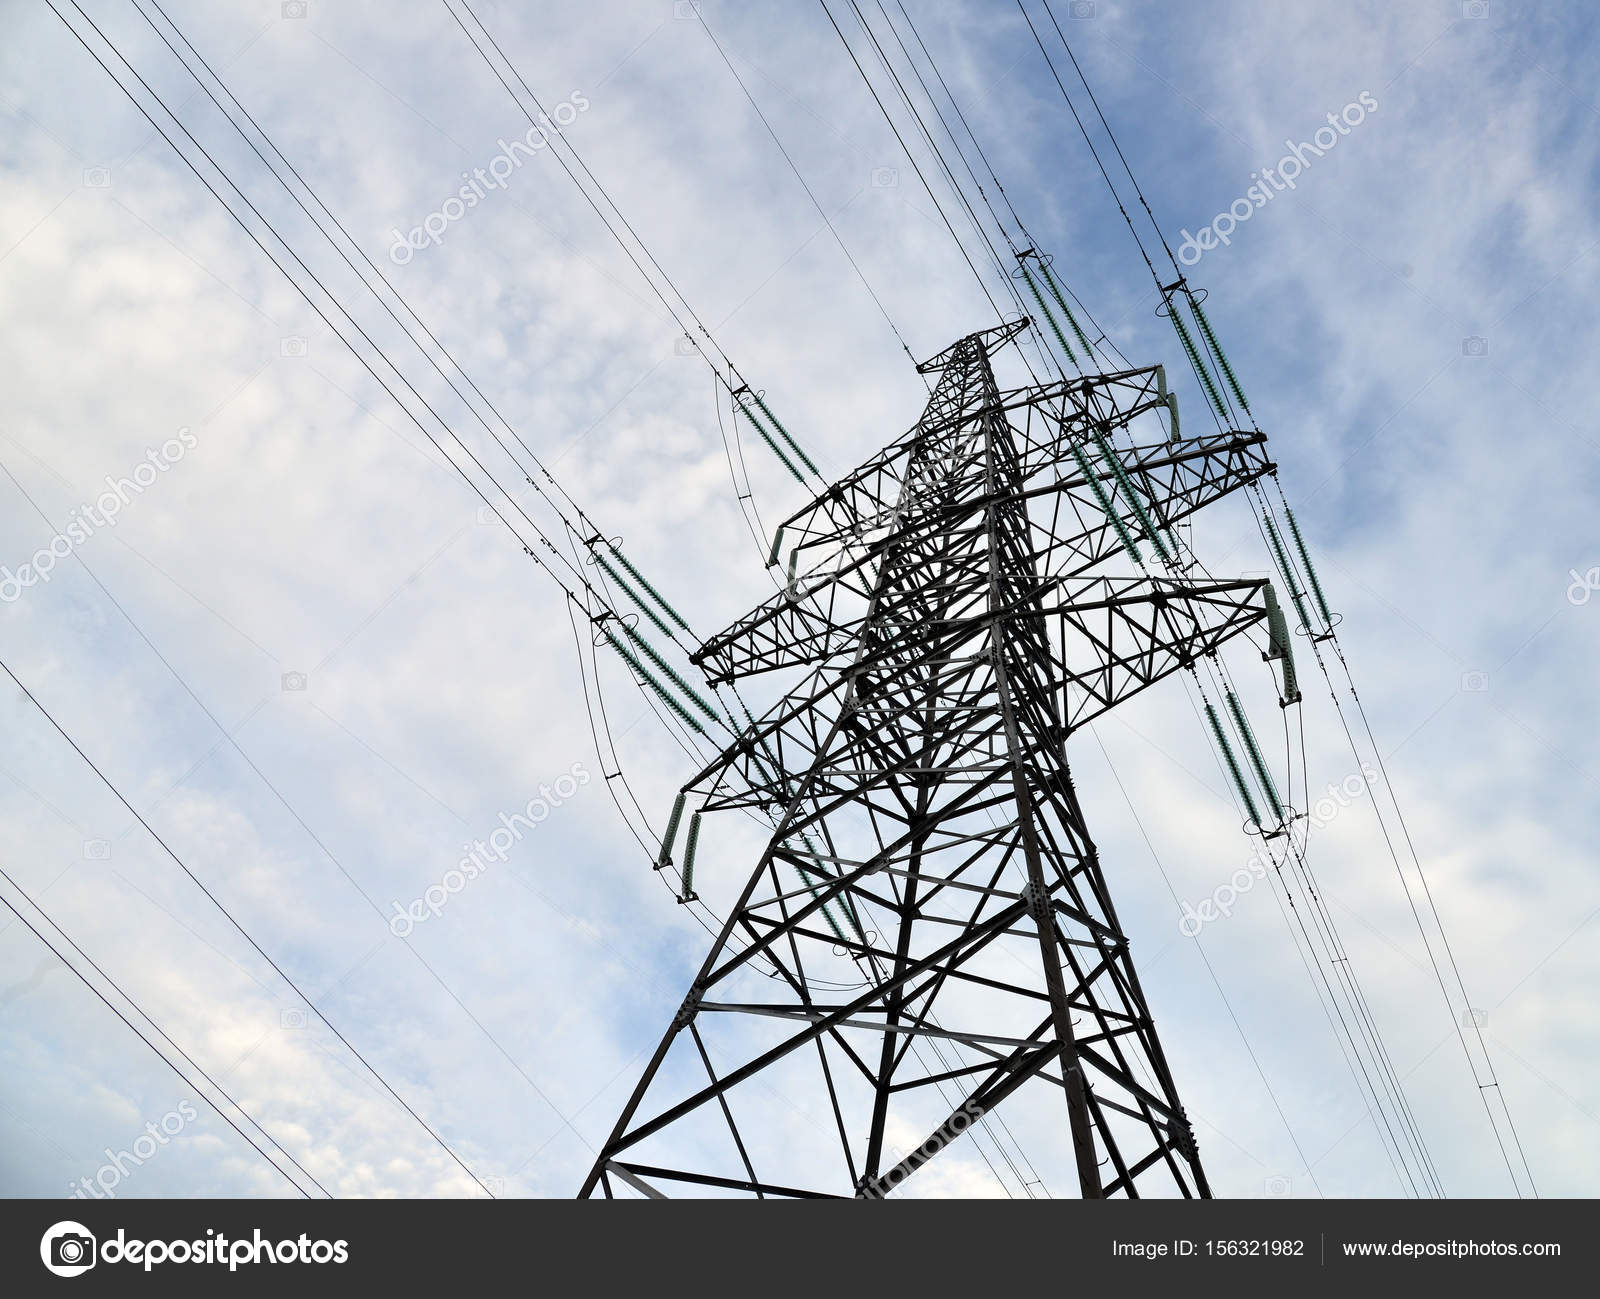 Electric power lines close up. — Stock Photo © ivantcovlad #156321982